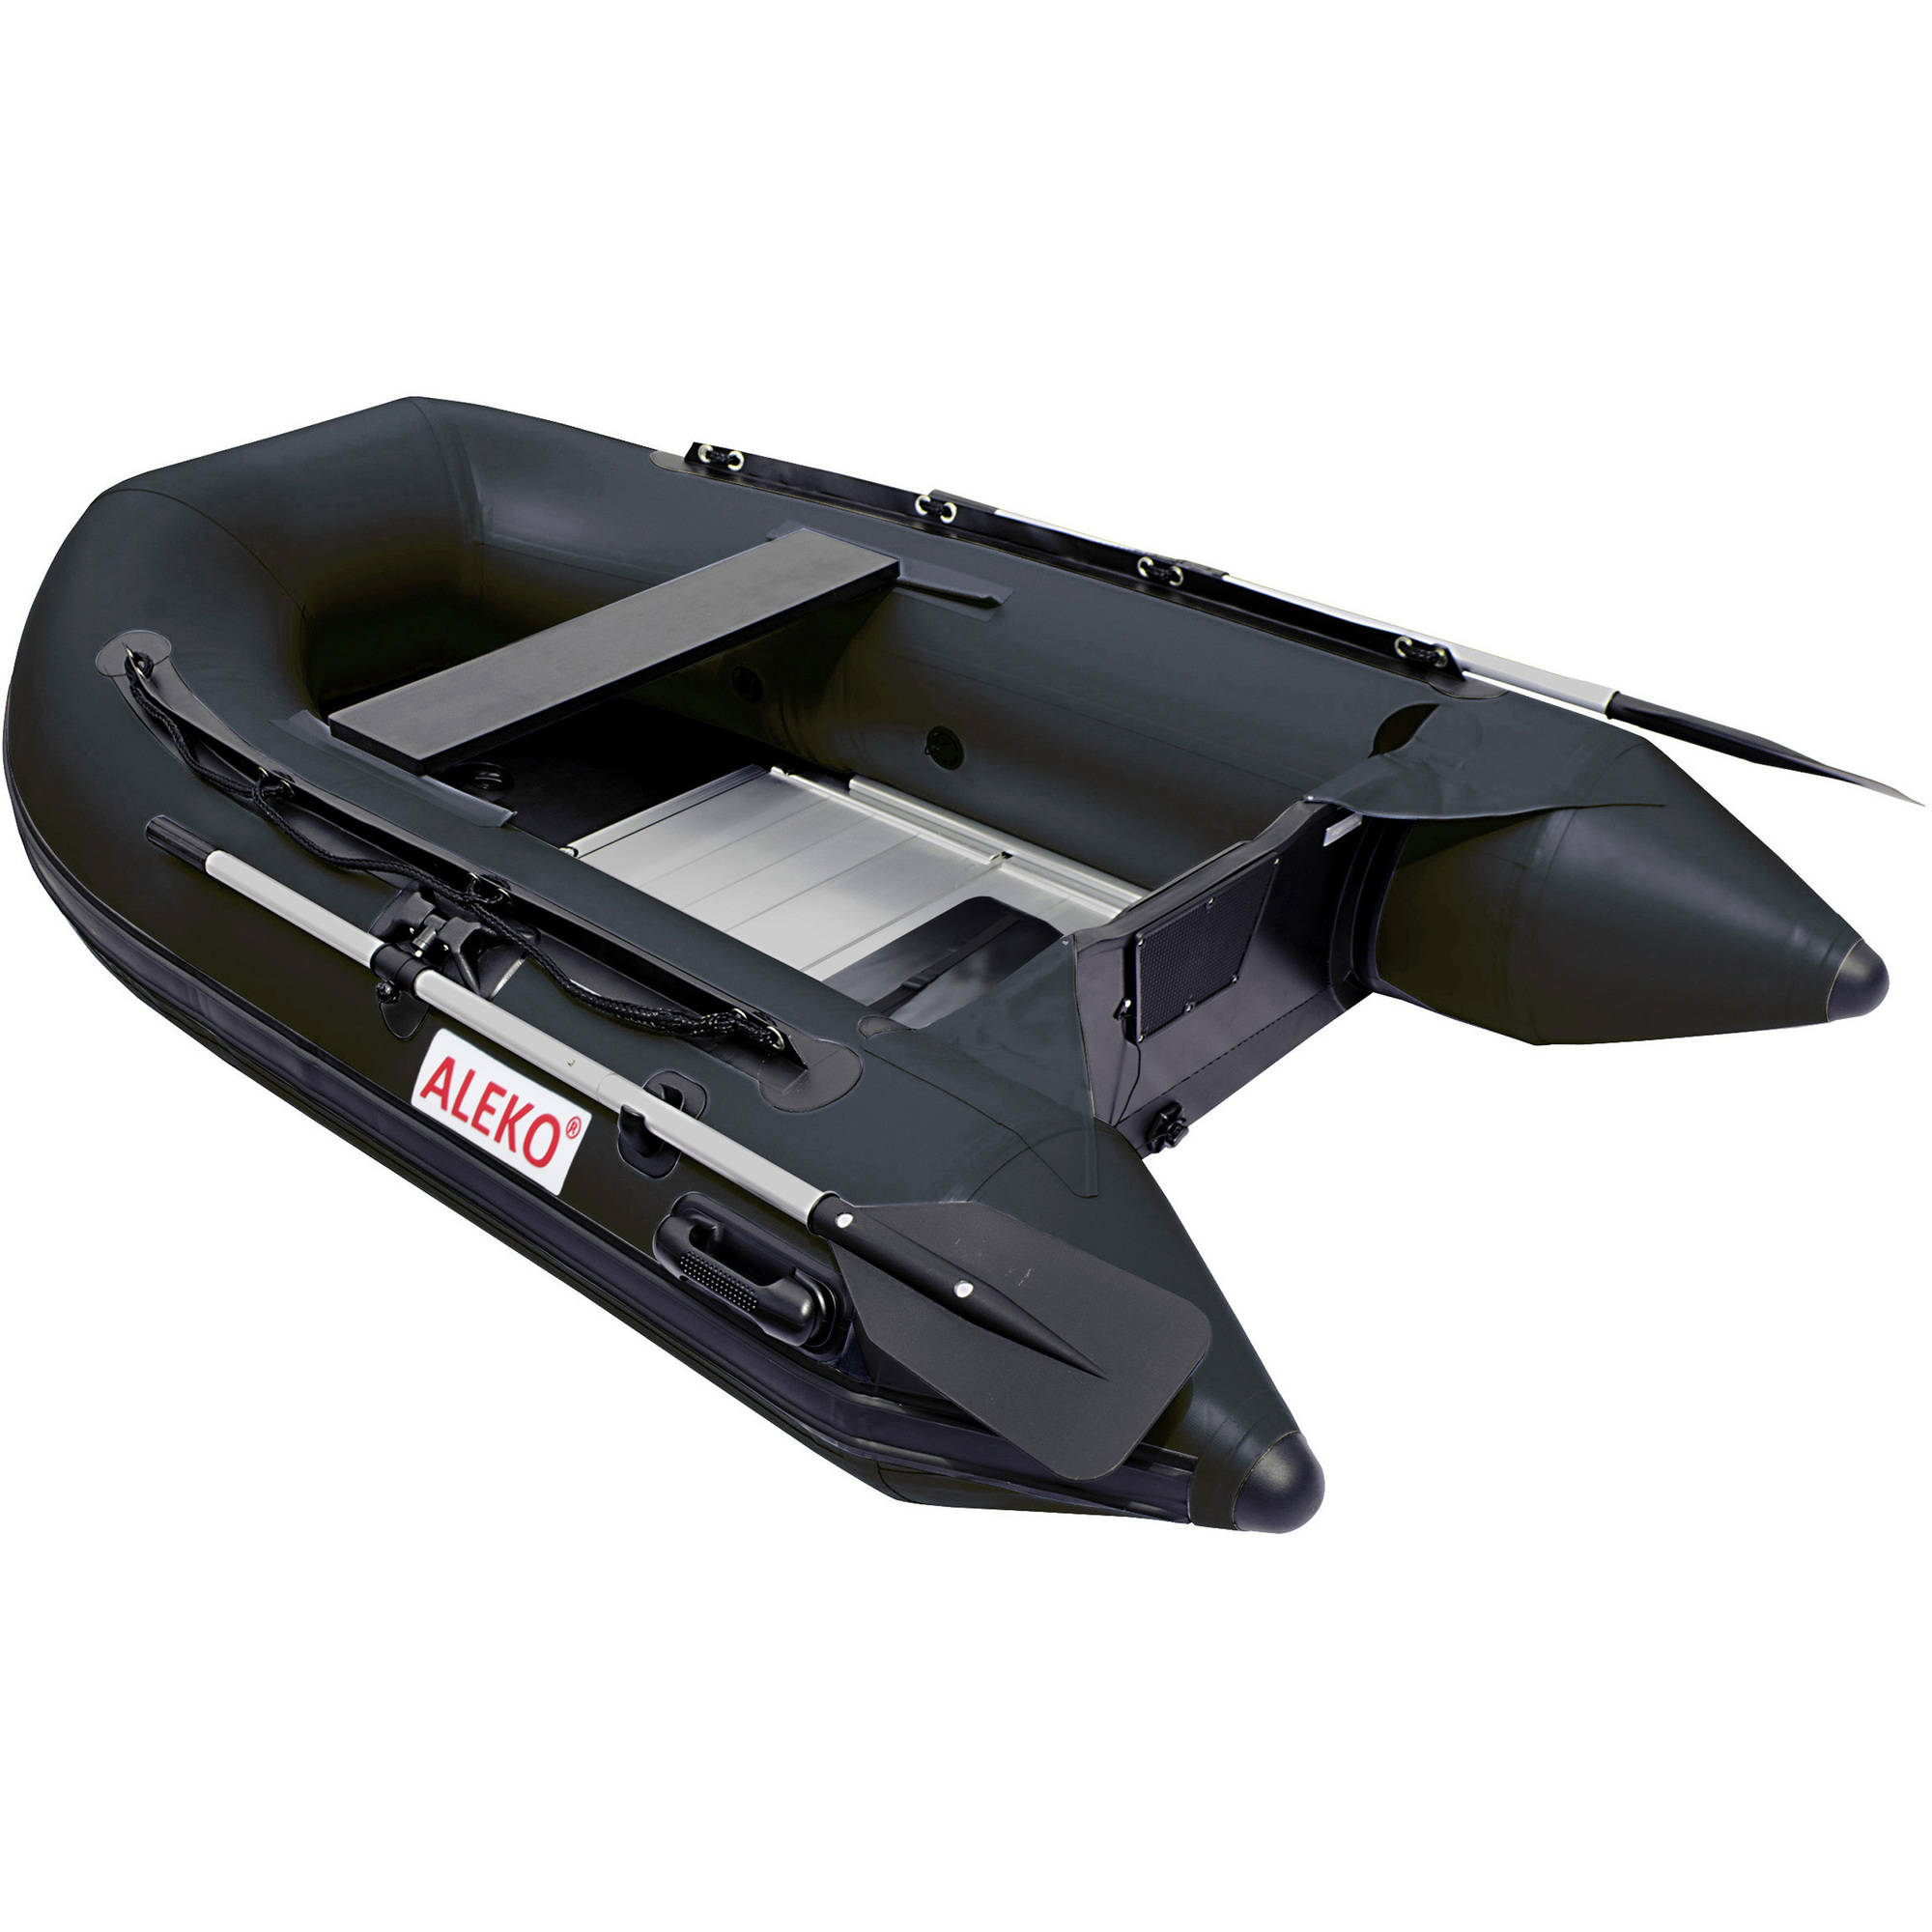 ALEKO BT250BK Inflatable 3 Person Boat 8.4 feet Aluminum Floor, Black - image 1 of 14